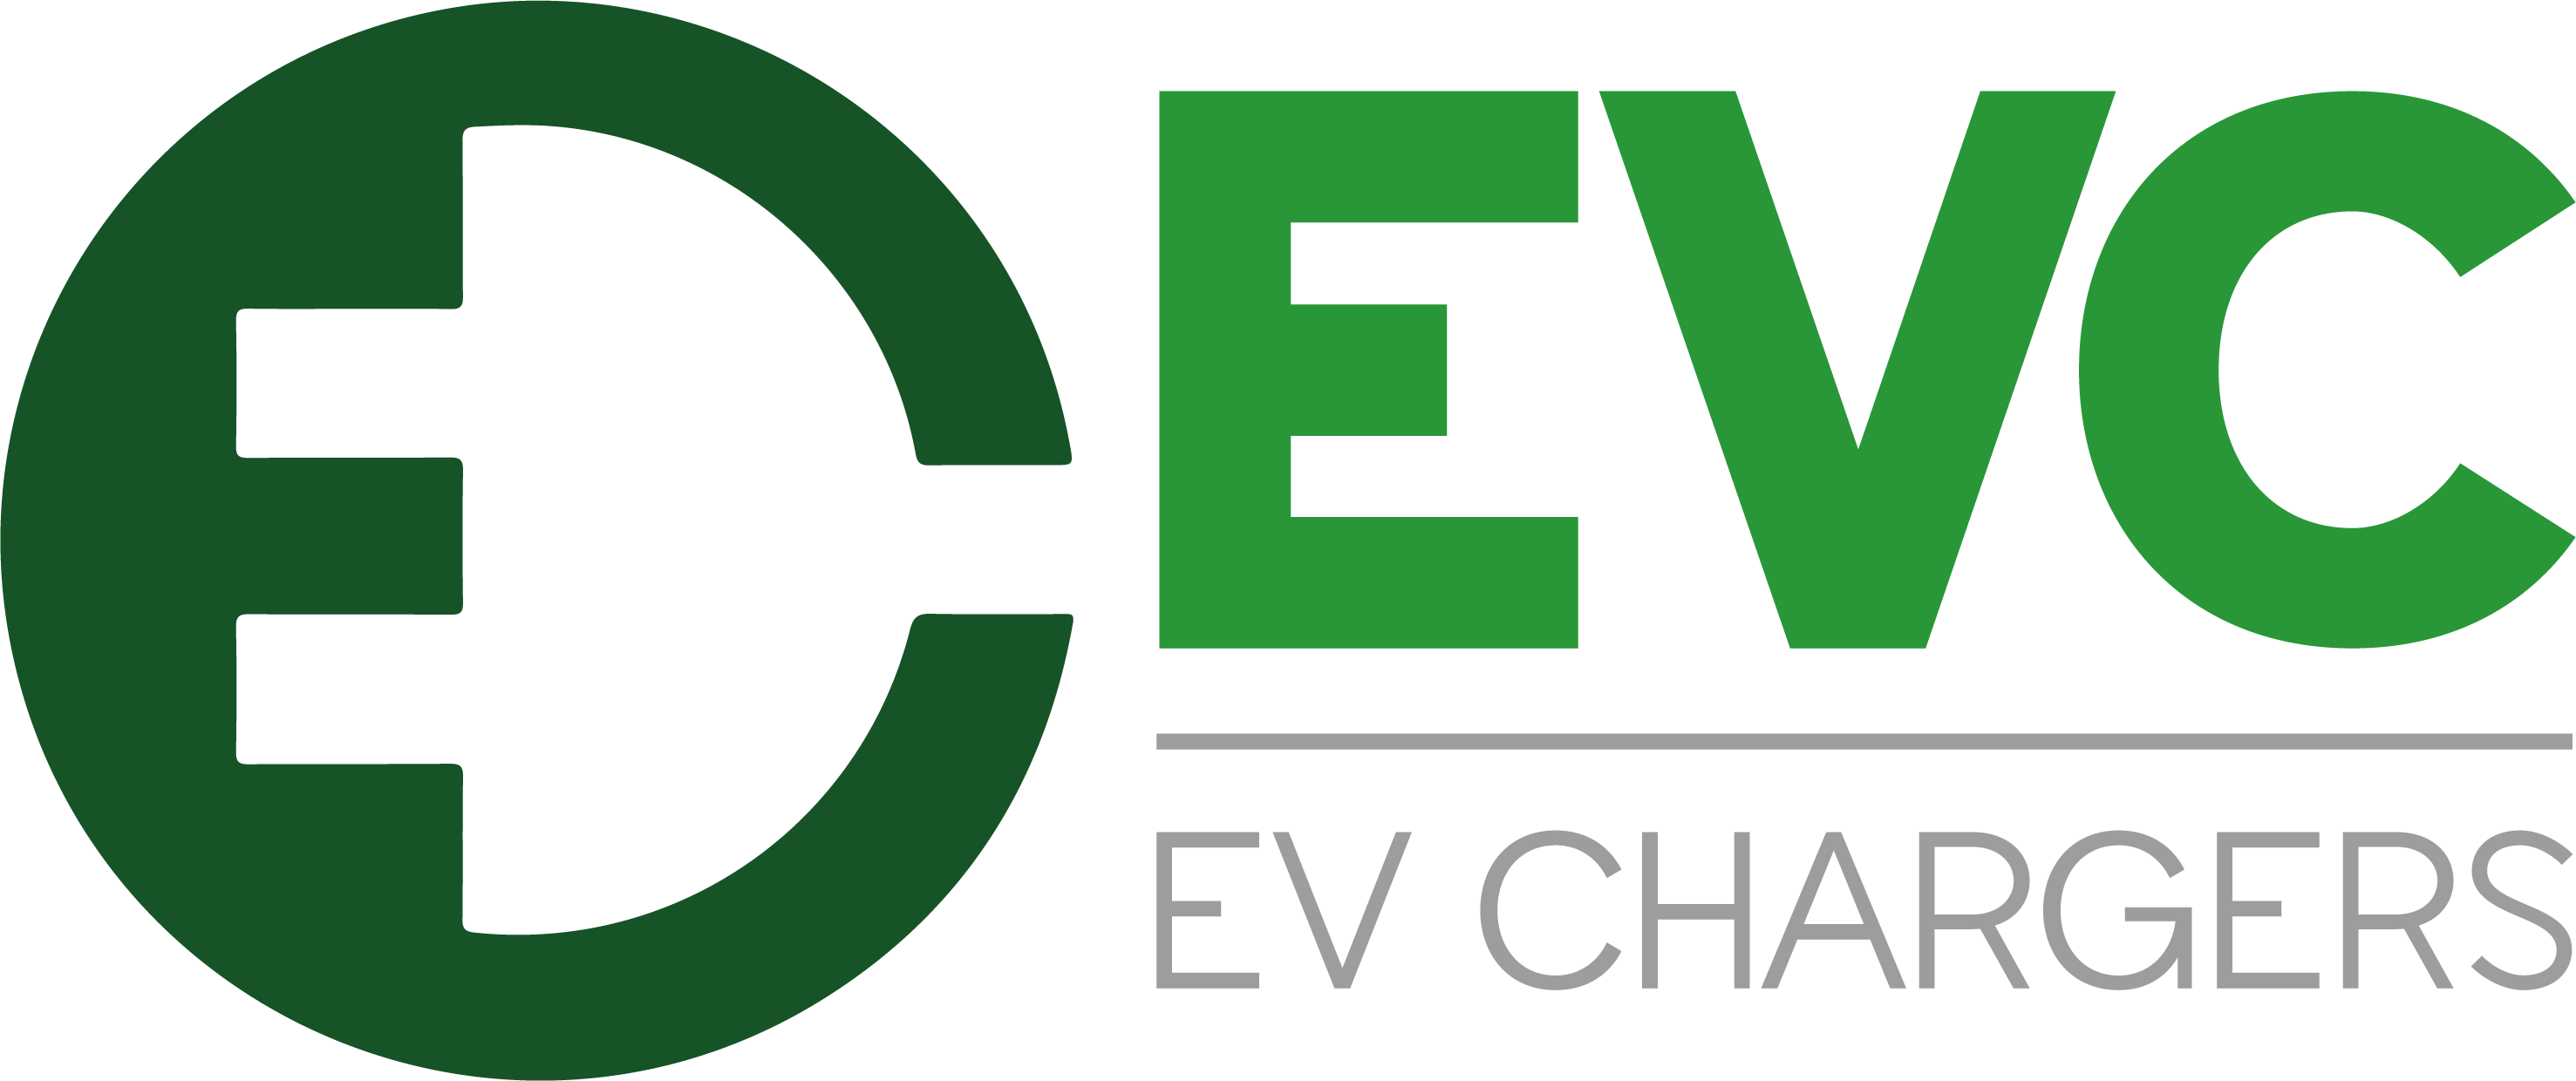 Evchargers Logo Cmyk